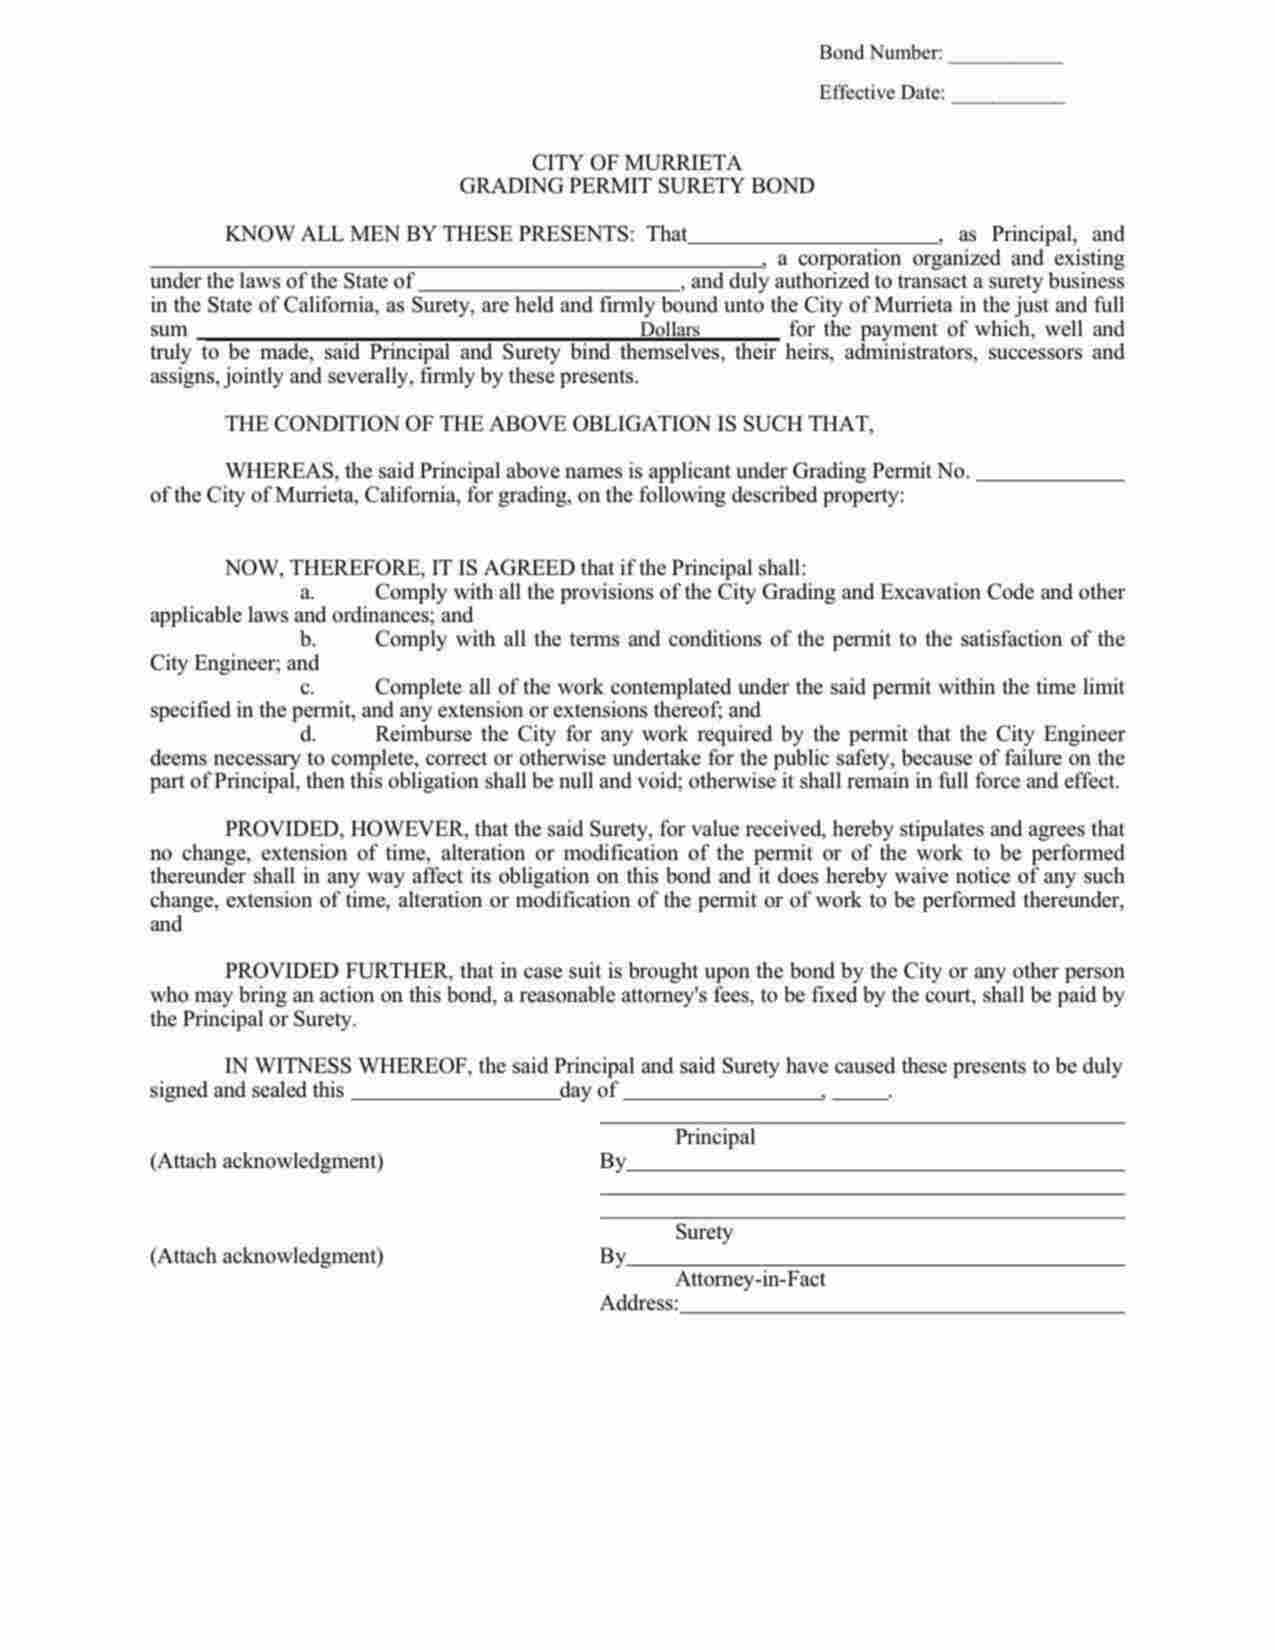 California Grading Permit Bond Form